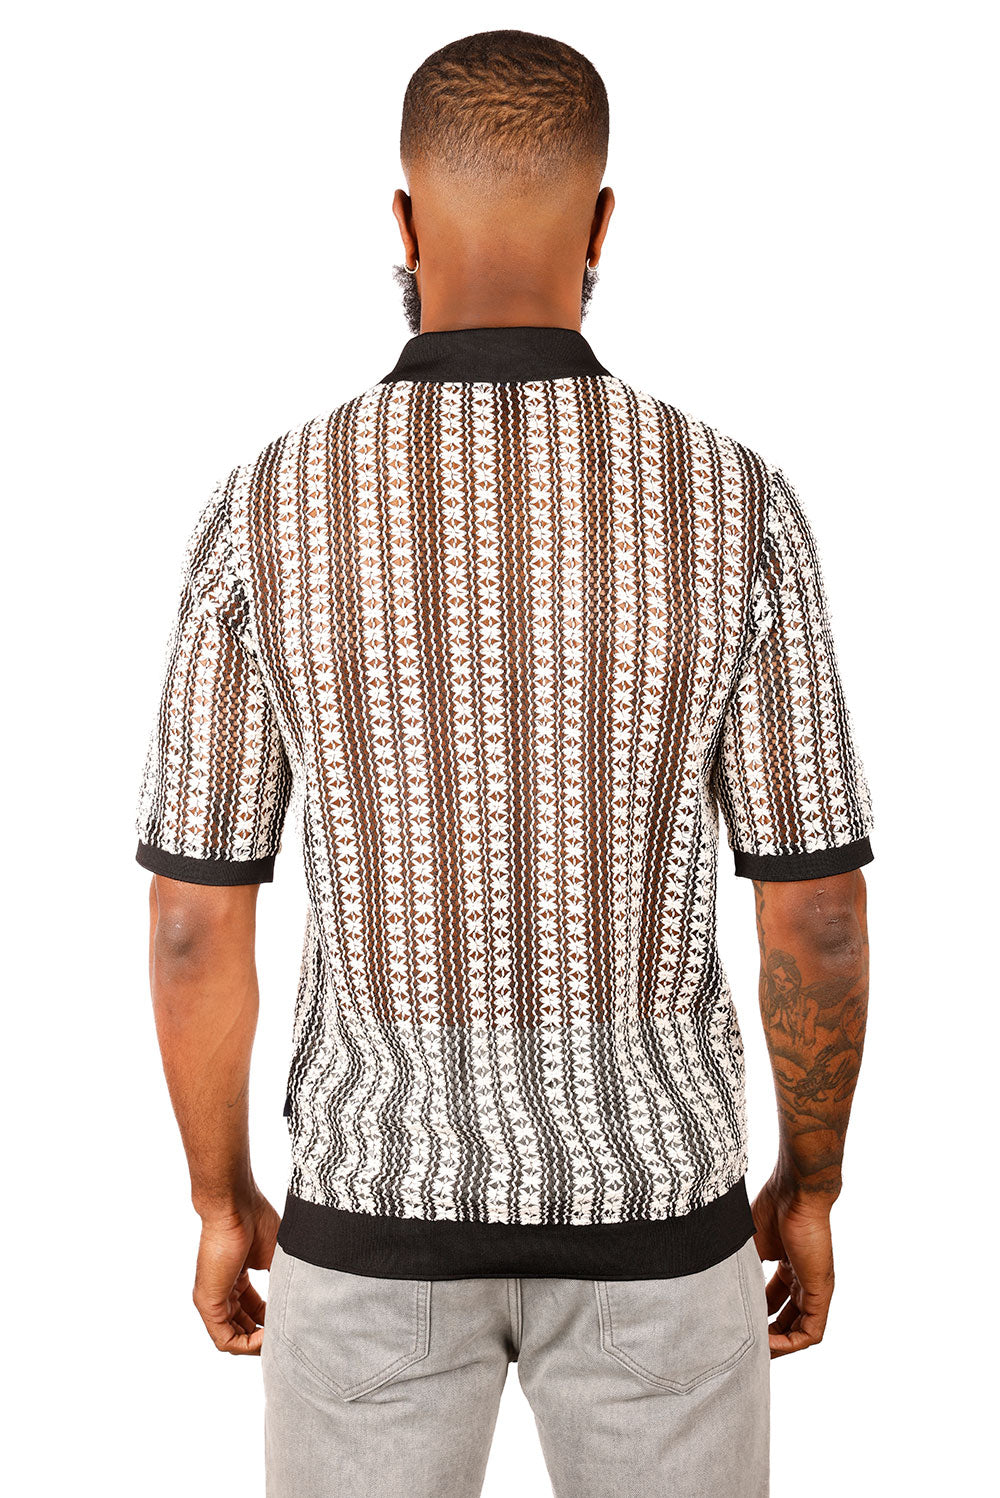 Barabas Men's Crochet Geometric Stripped See Through Polo Shirts 3P15 Black White